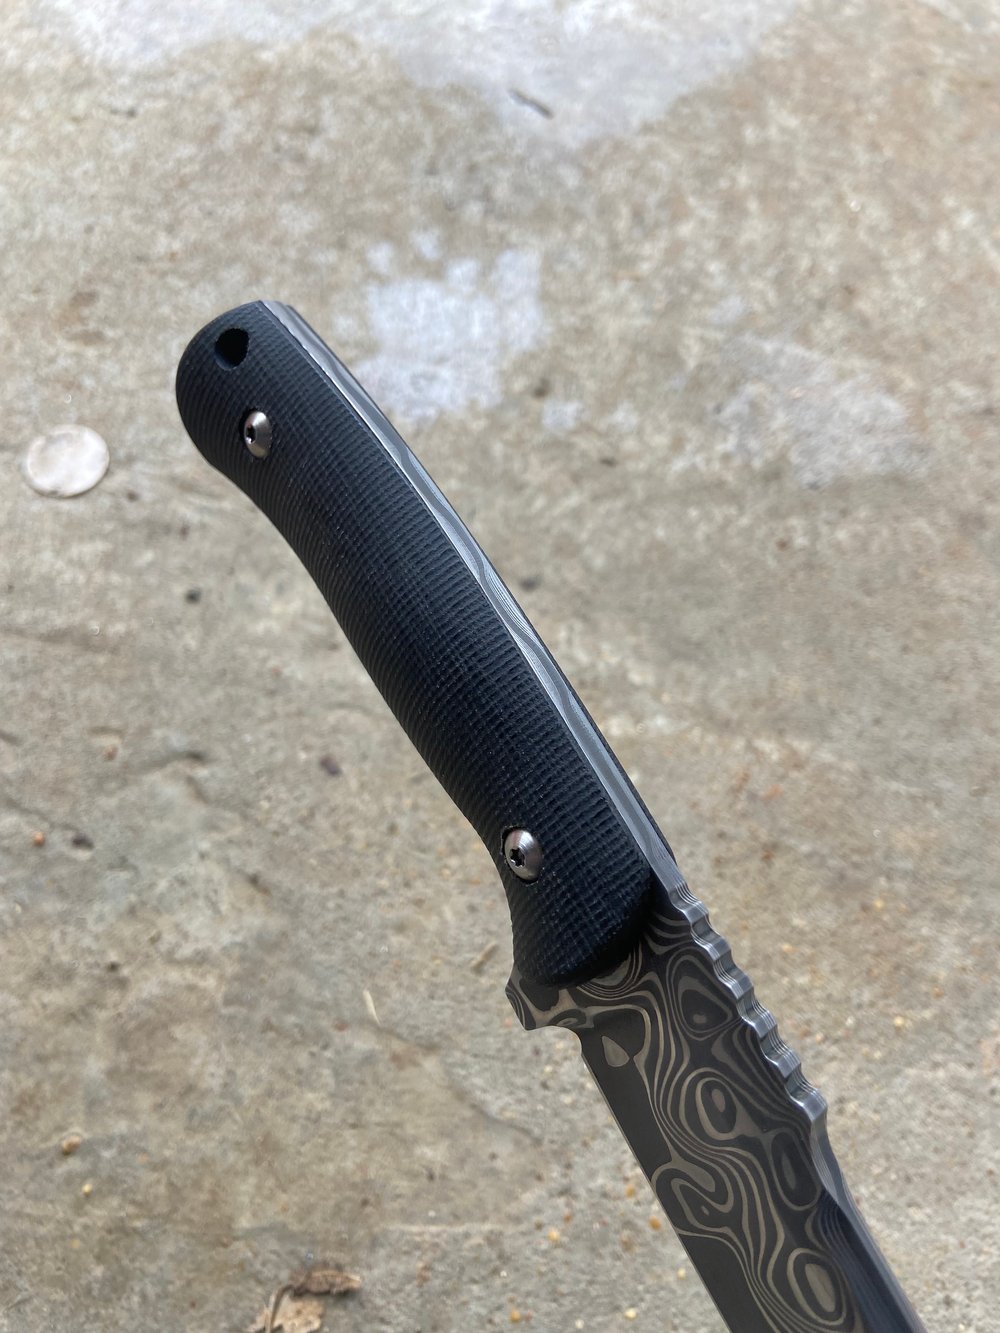 Fixed blade skunk works